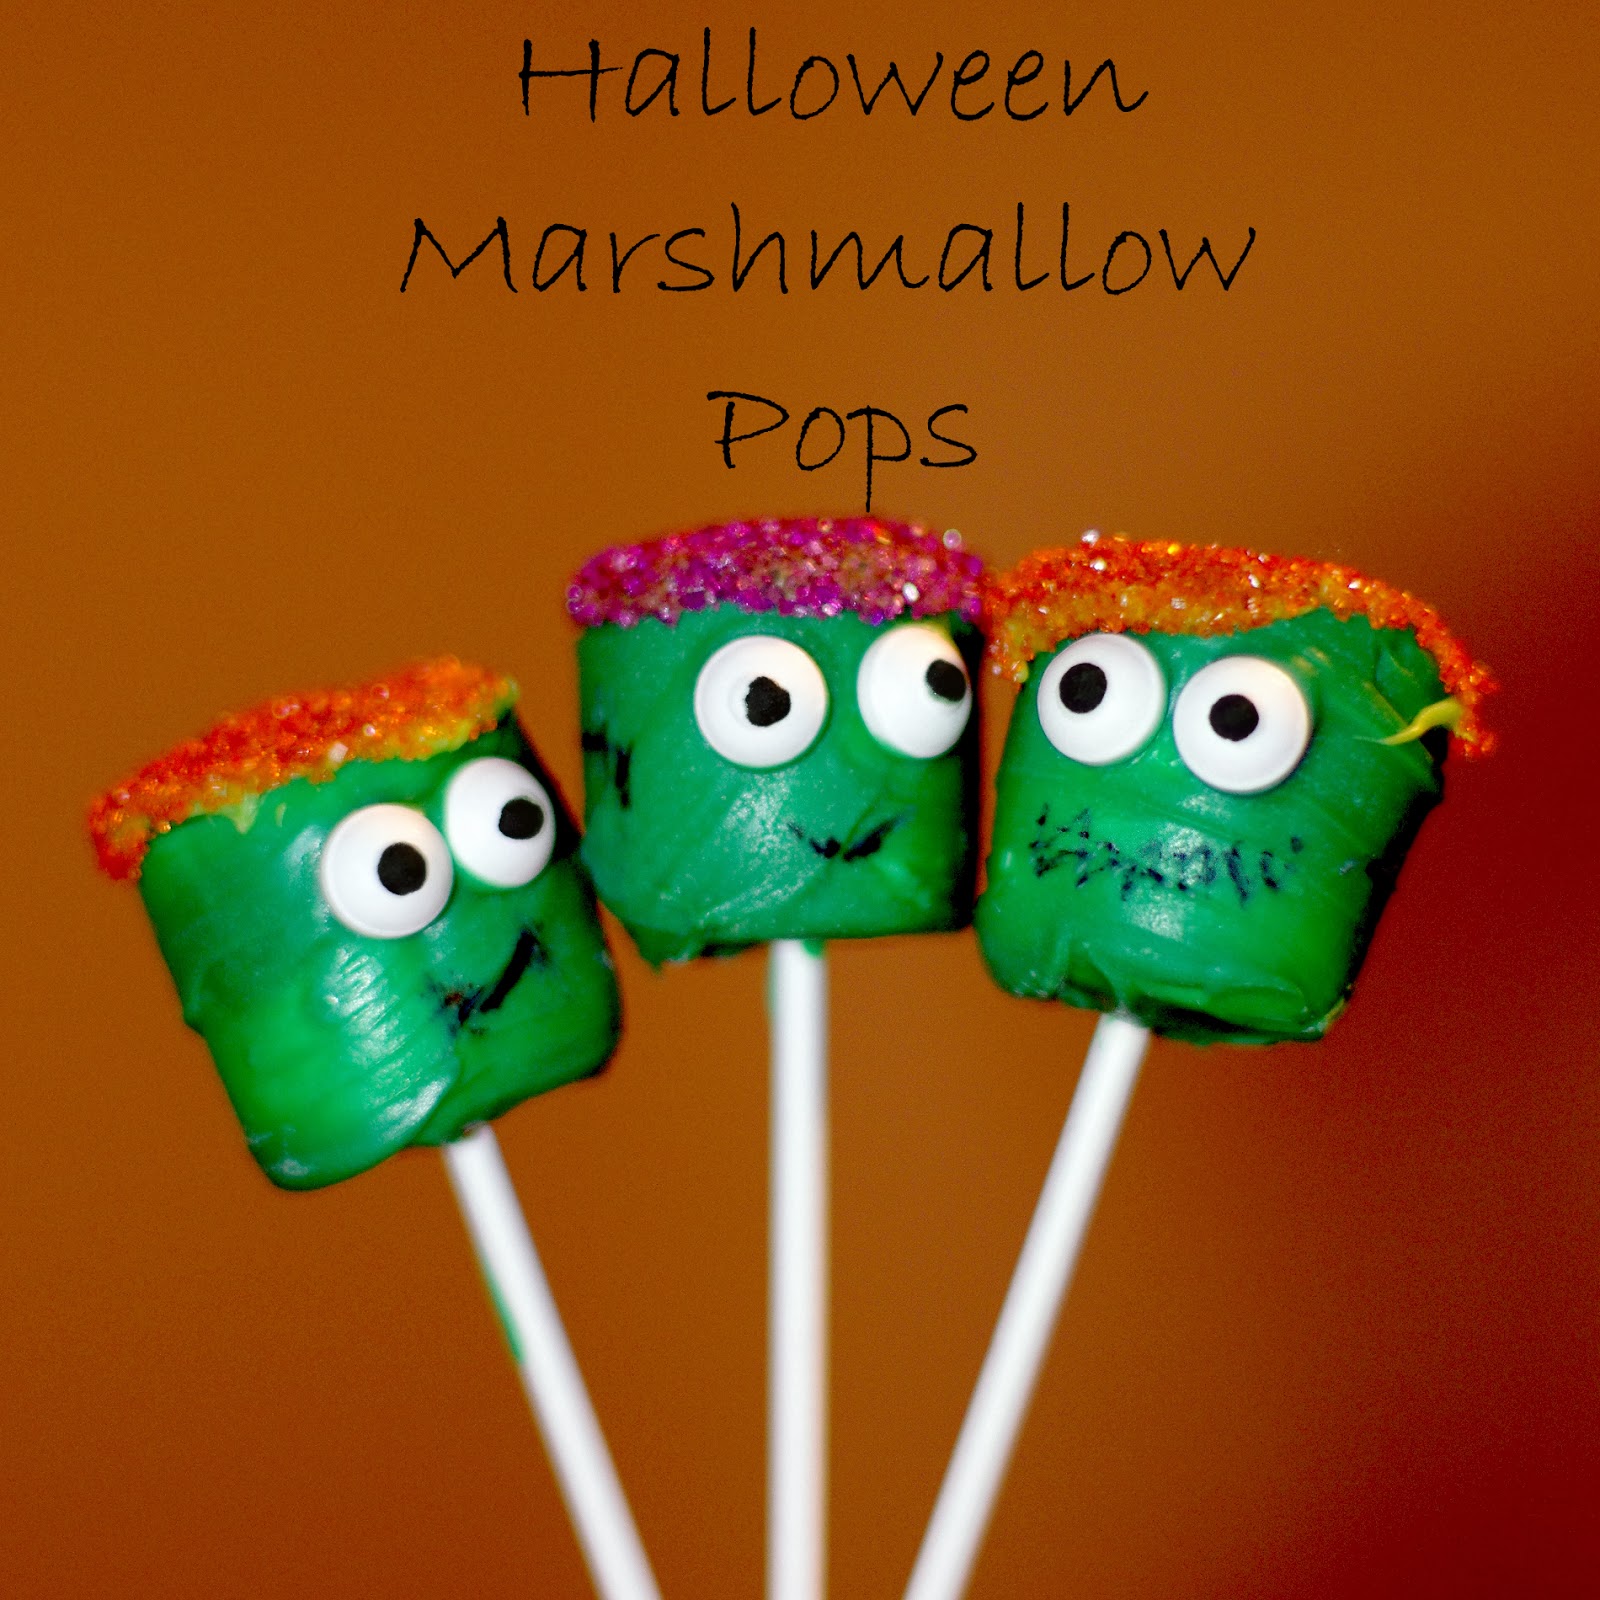 Within the Kitchen Halloween Monster Marshmallow Pops